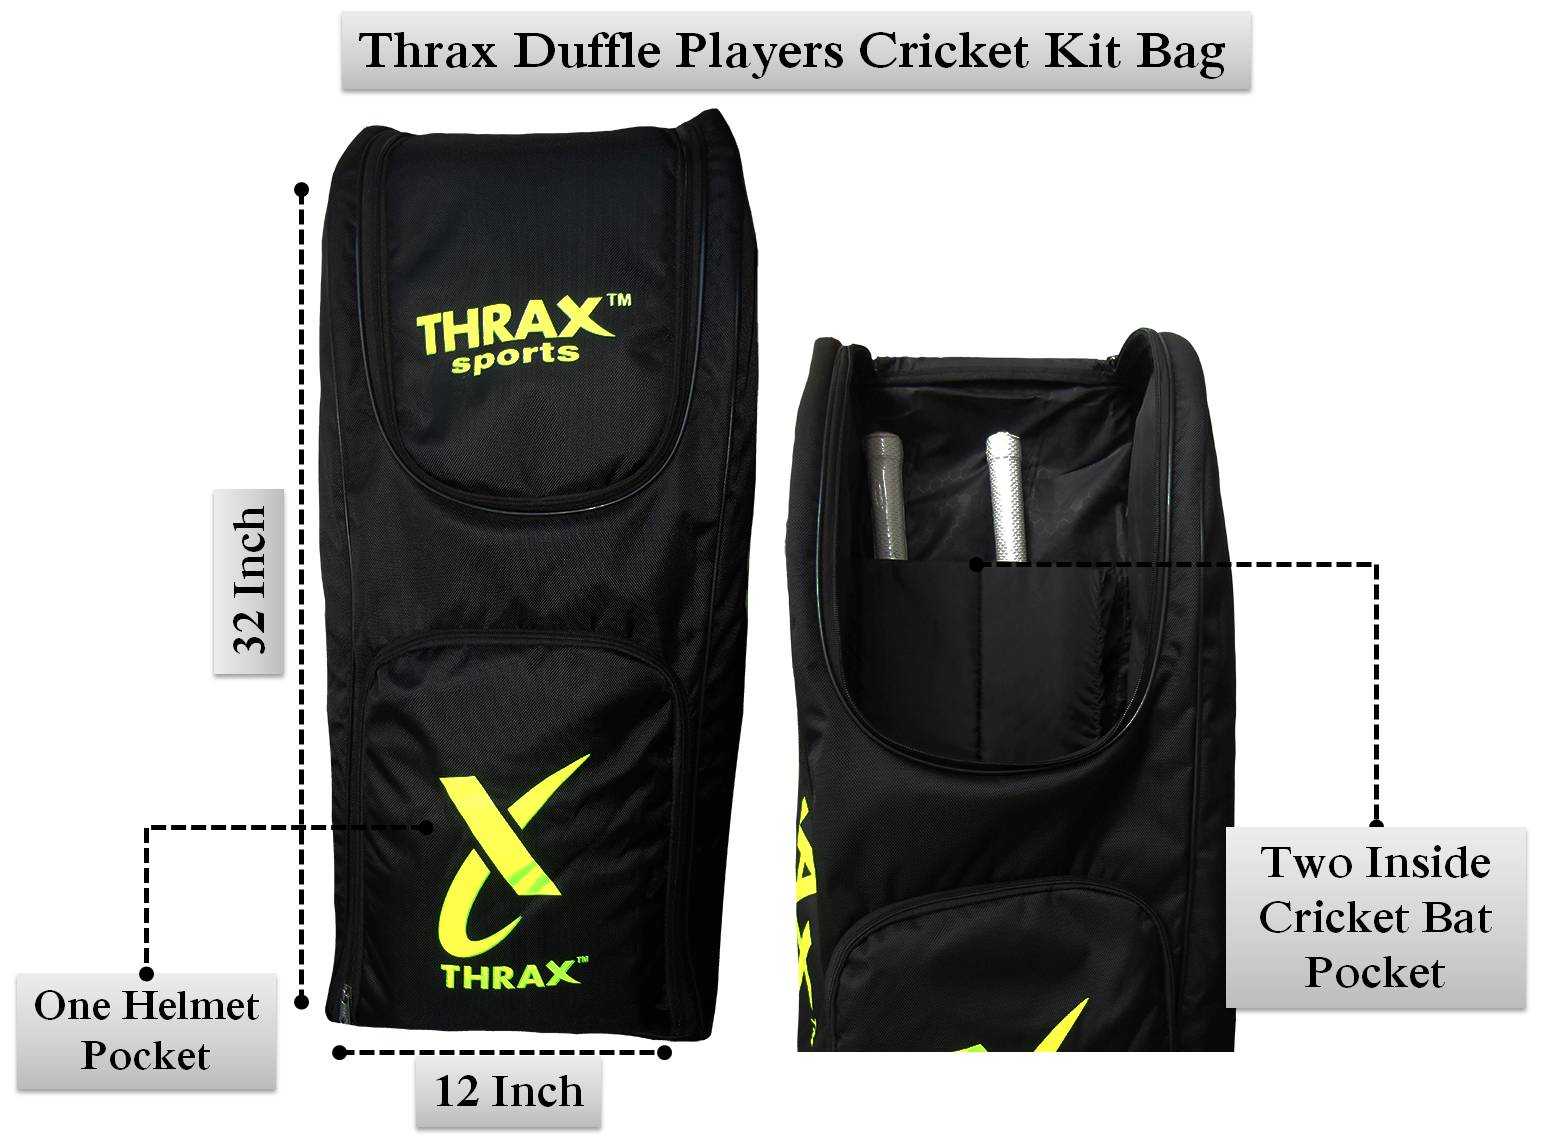 Thrax_Duffle_Players_Cricket_Kit_Bag_Khelmart